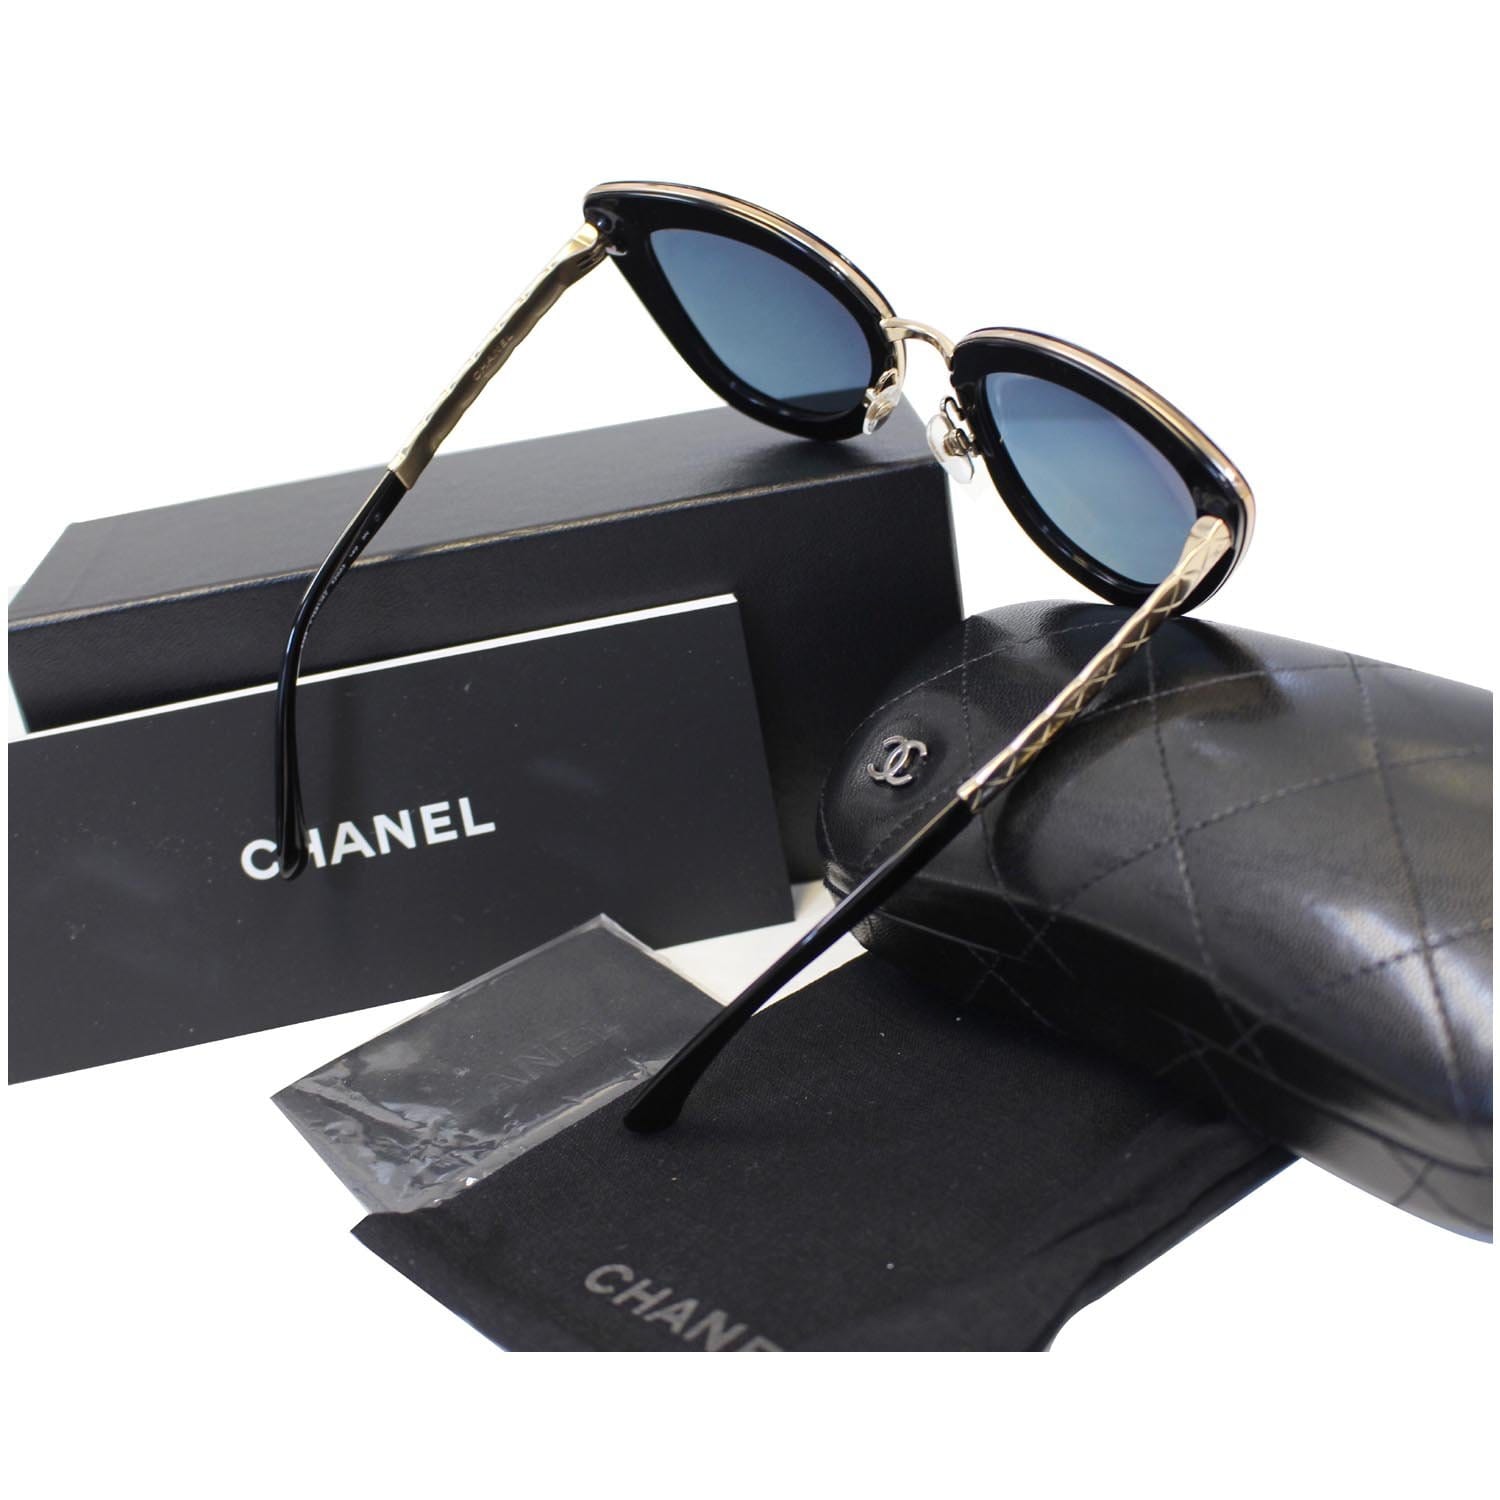 Chanel - Cat Eye Sunglasses - Dark Tortoise Gold - Chanel Eyewear